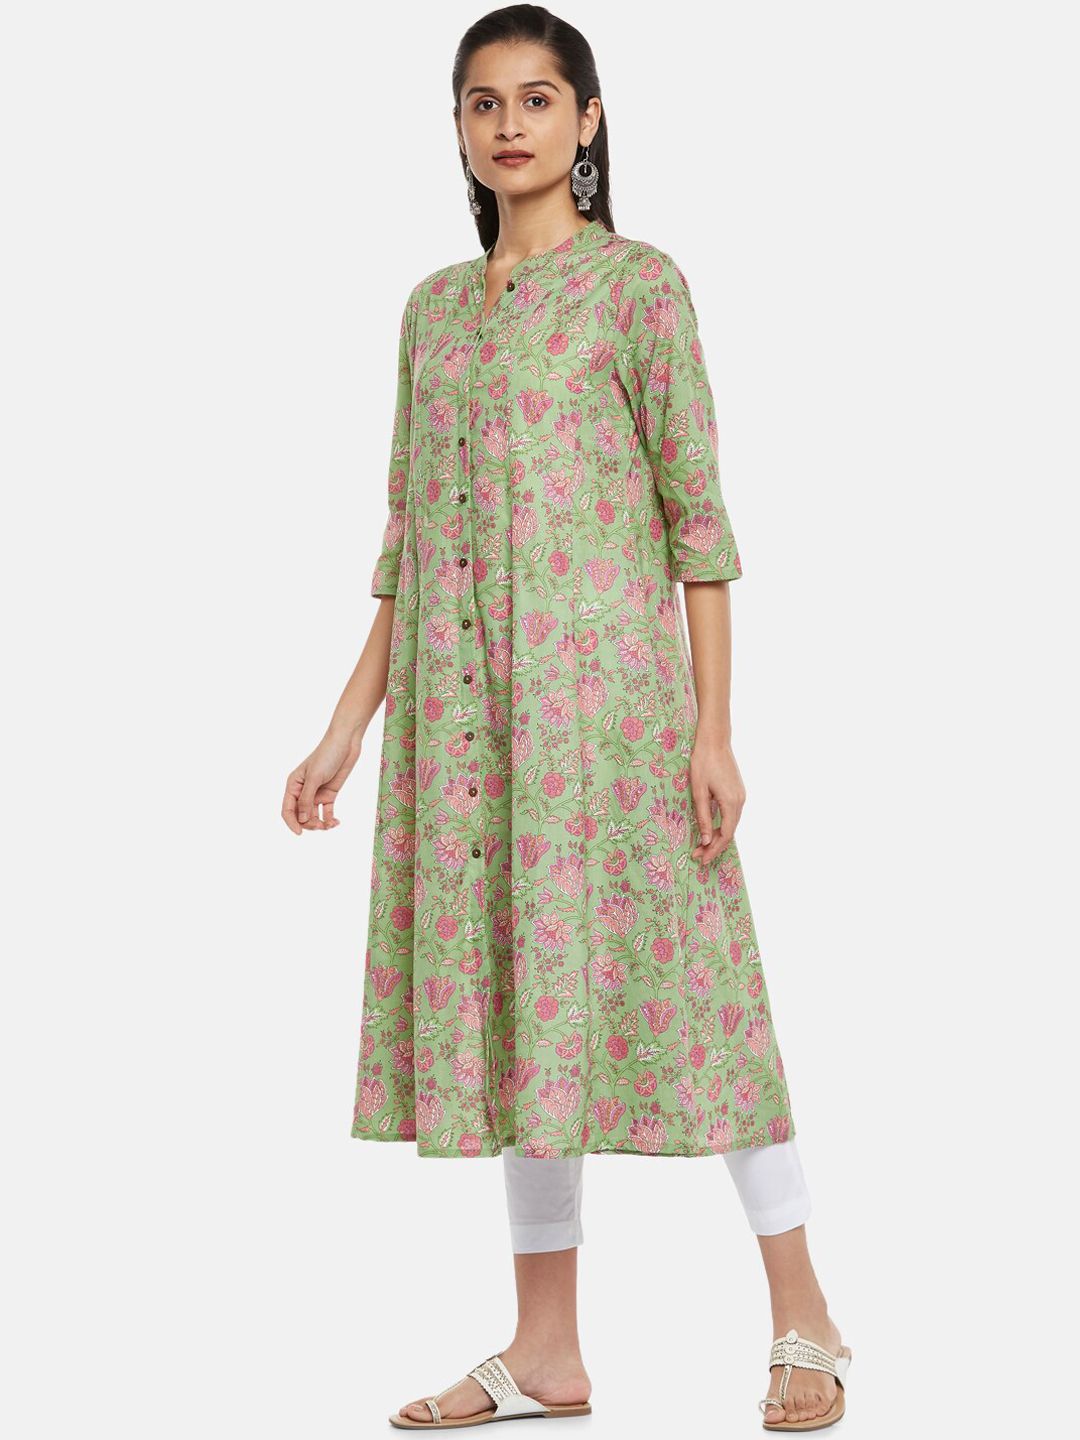 RANGMANCH BY PANTALOONS Women Green Floral Printed Flared Sleeves Thread Work Anarkali Kurta Price in India